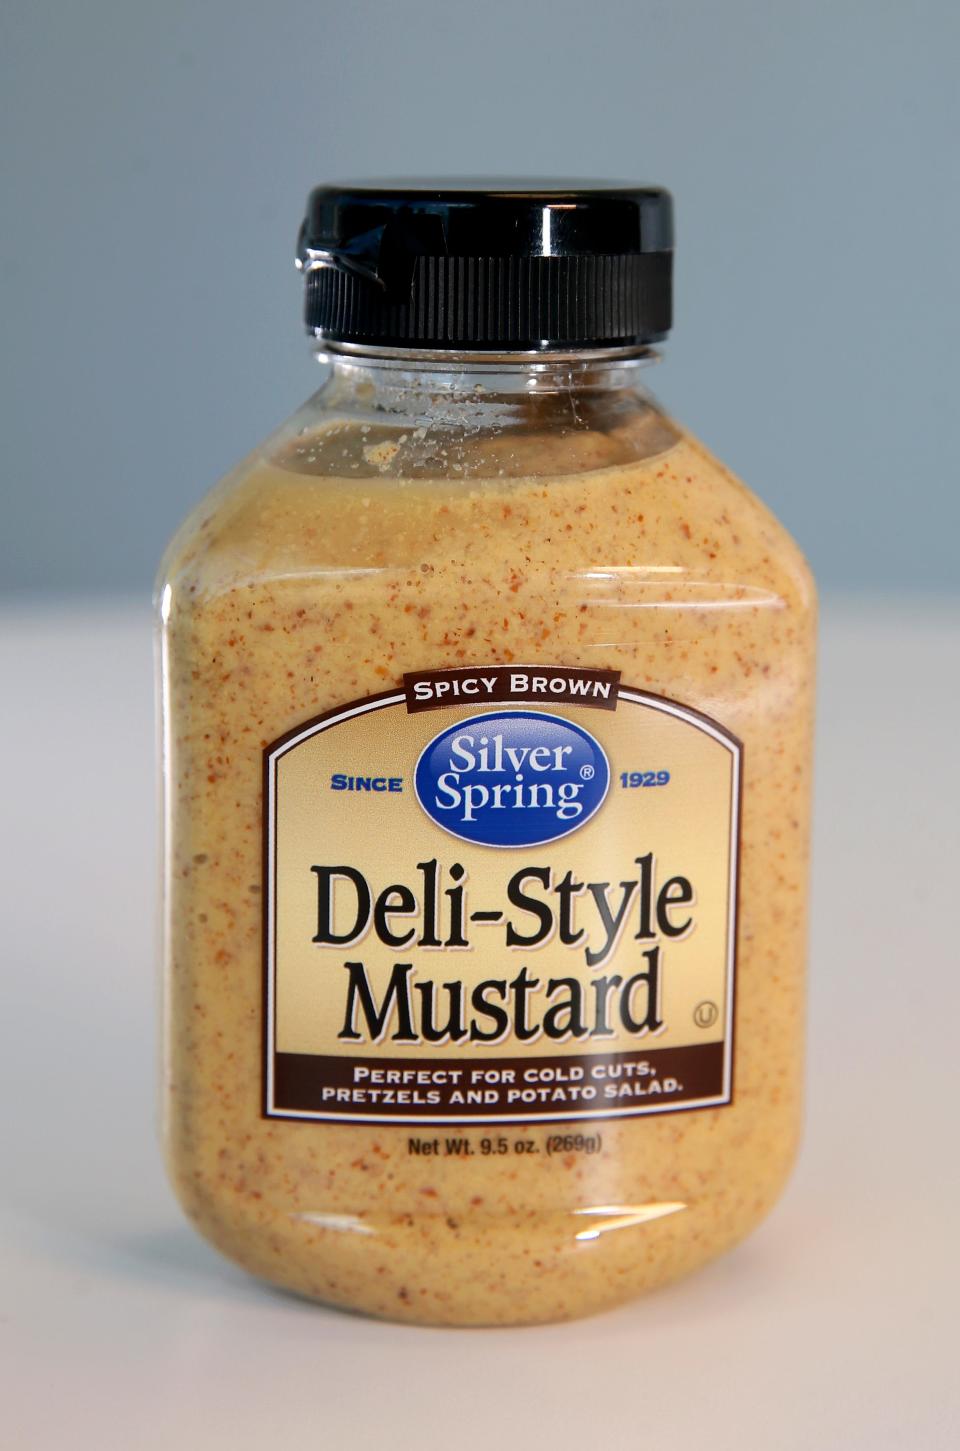 Silver Spring spicy brown deli-style mustard